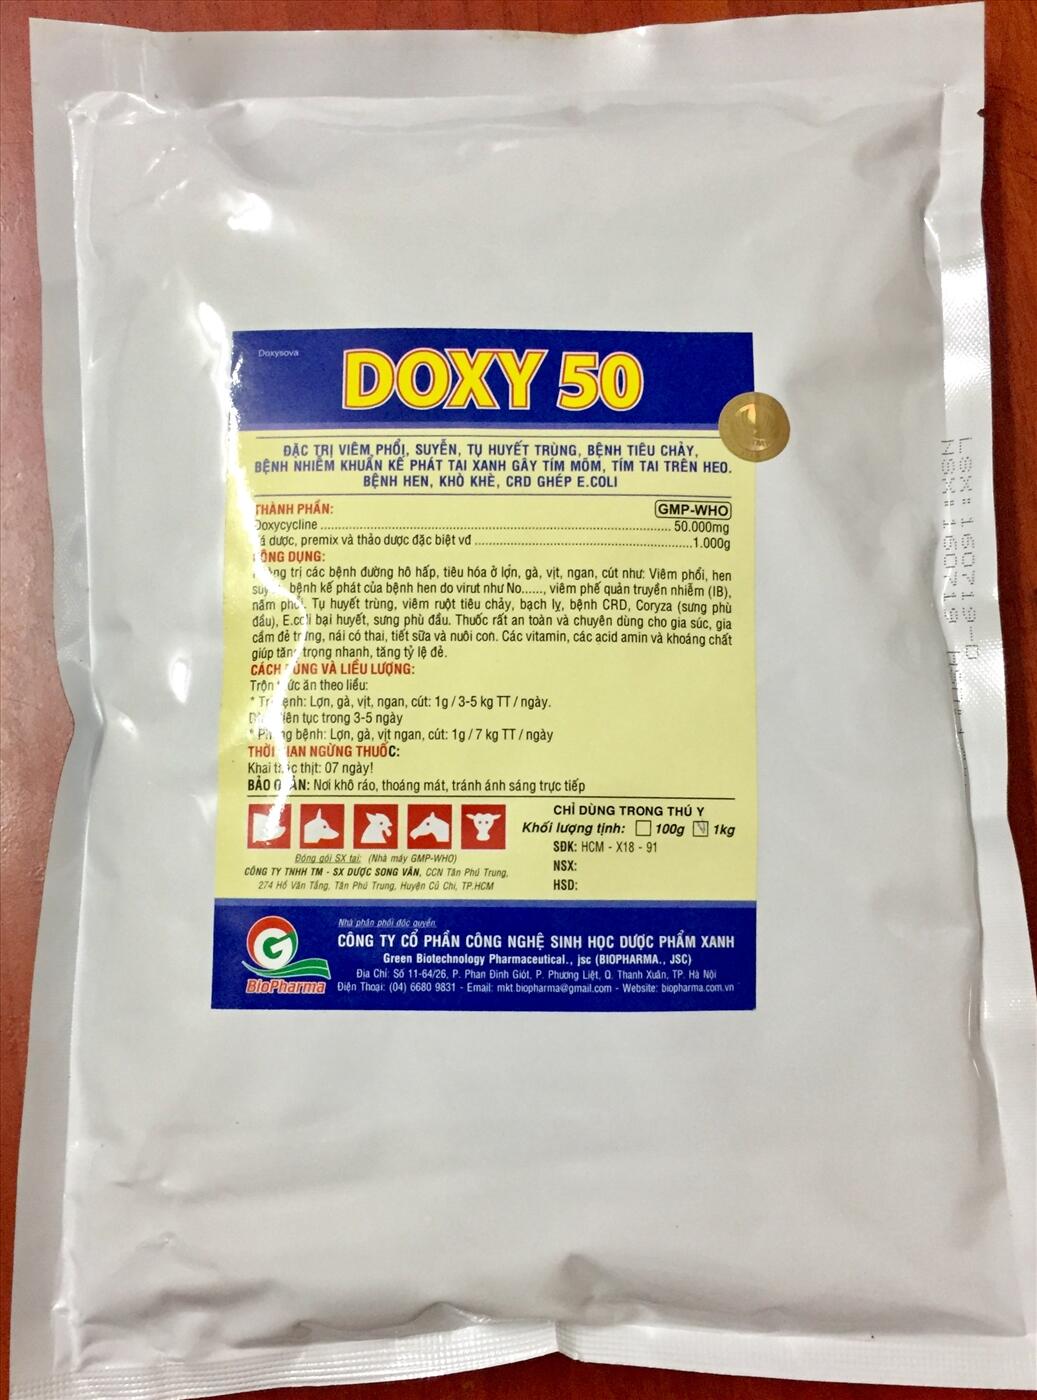 DOXY 50